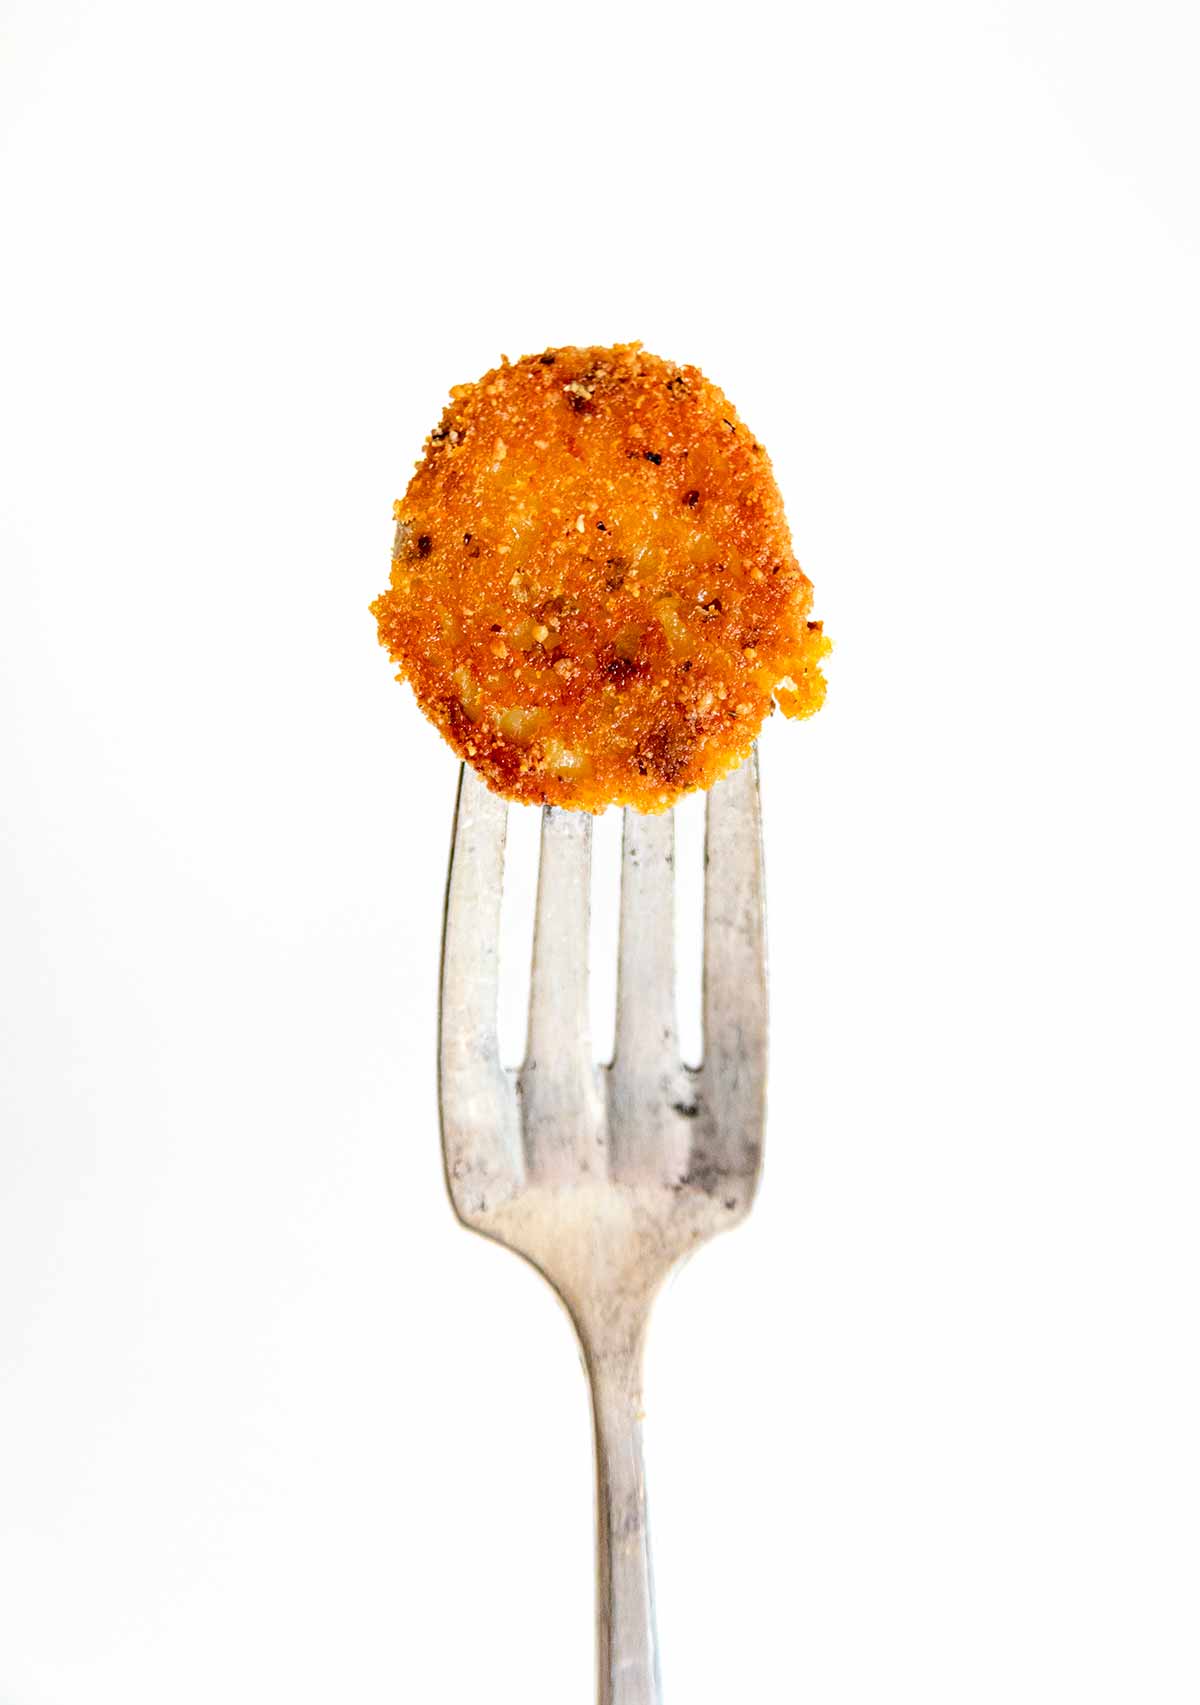 A crispy herbed Parmesan potato on a fork.